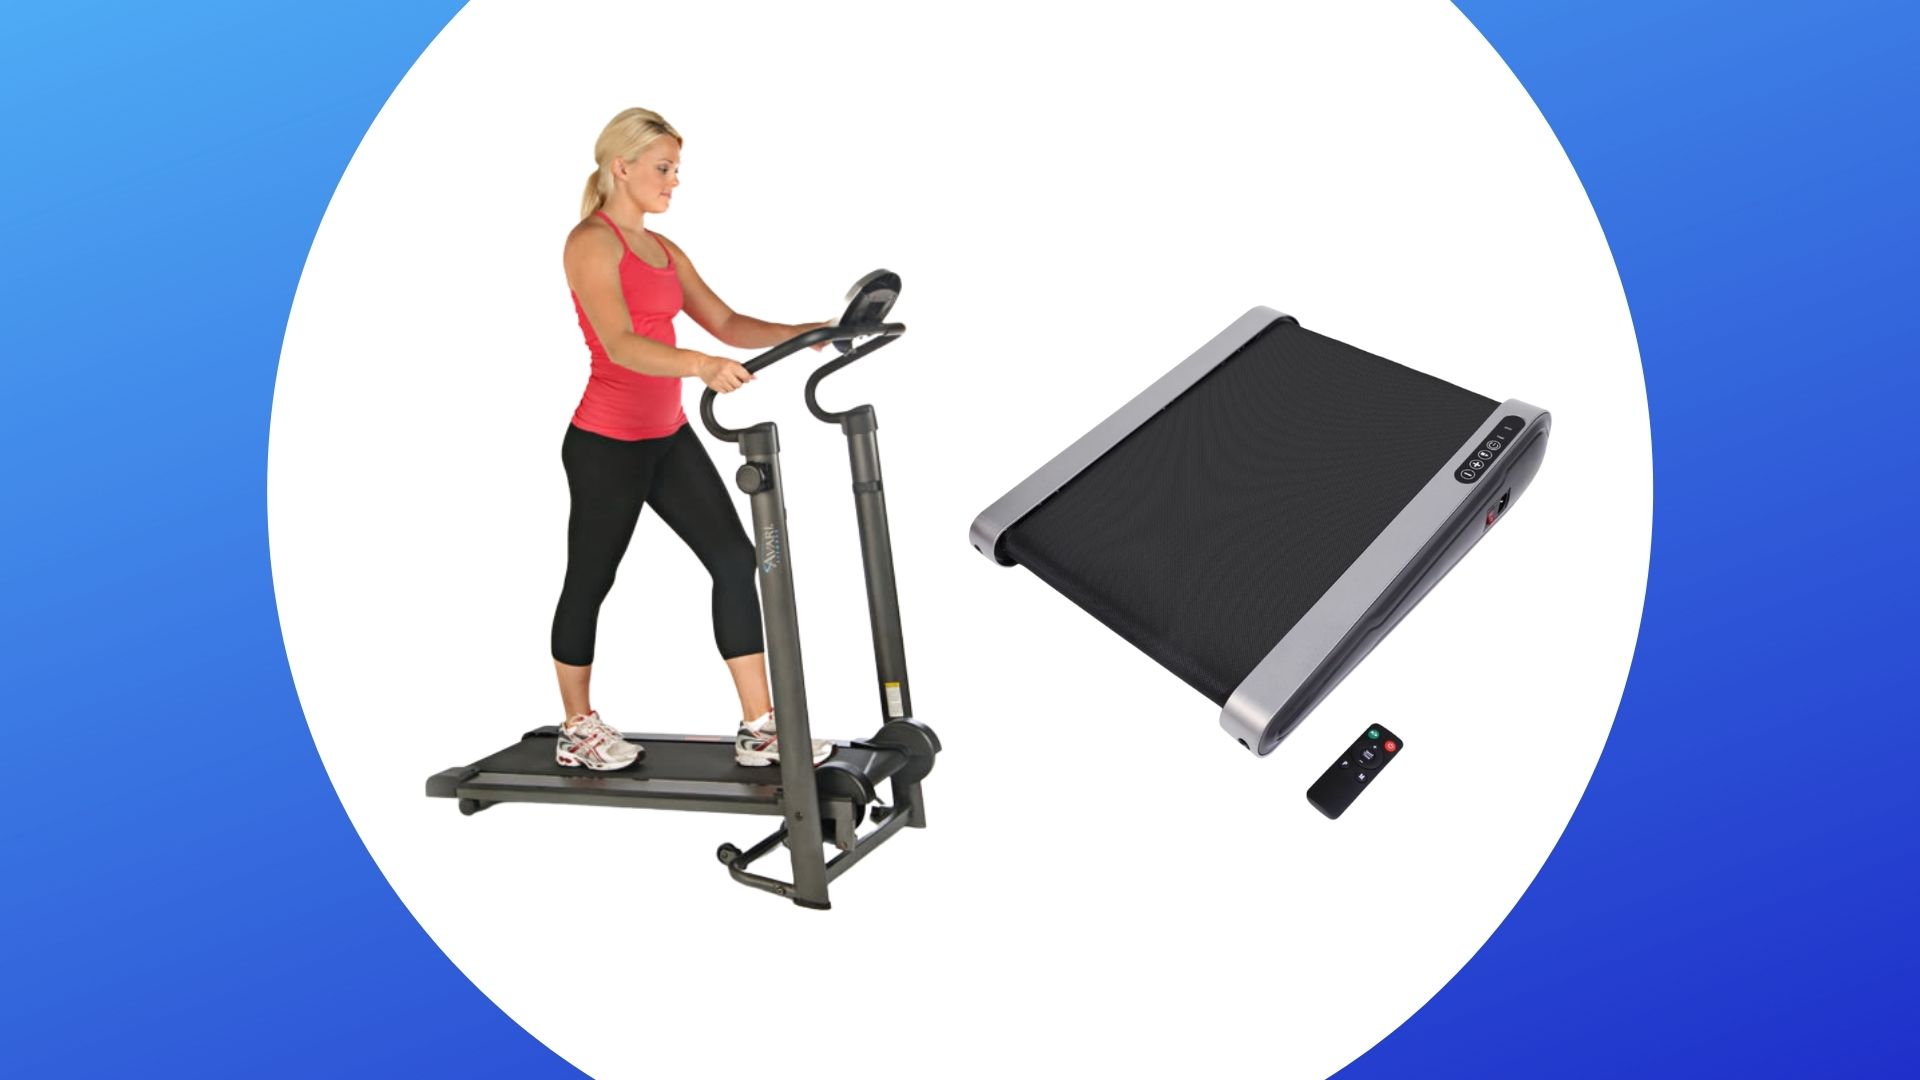 Folding Manual Mini Treadmill Exercise Fitness Running Jogging Walking Machine 